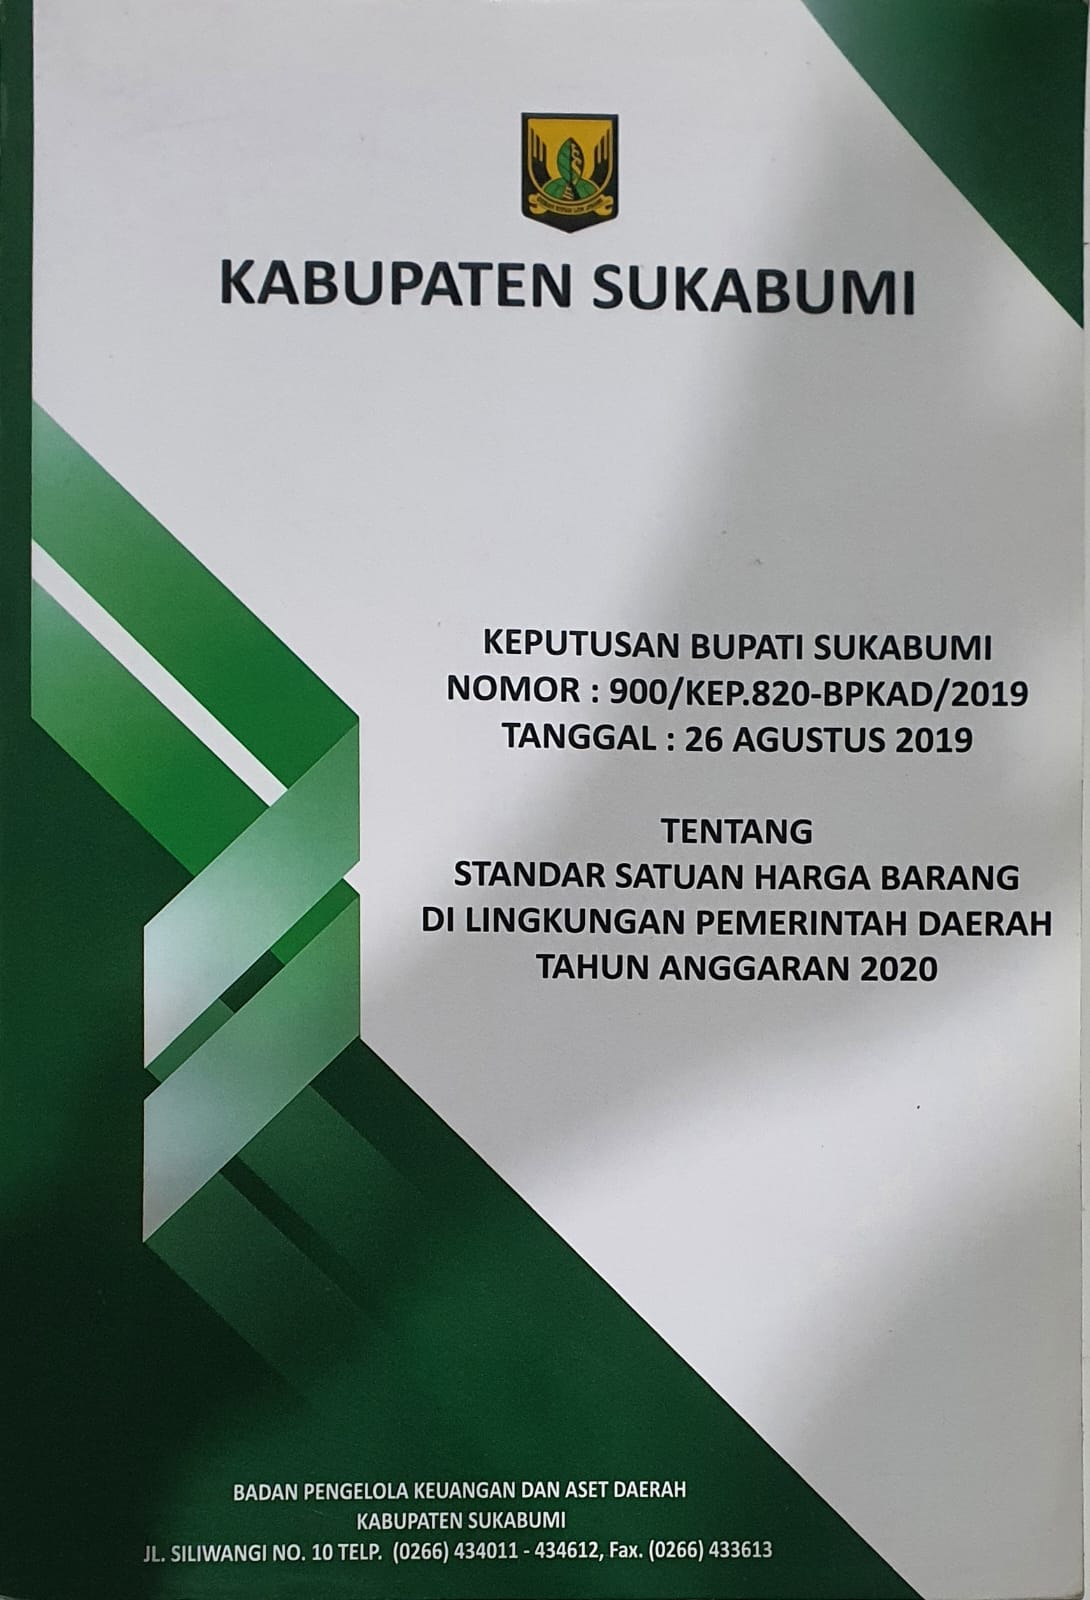 Keputusan Bupati Sukabumi Nomor : 900/KEP.820-BPKAD/2019 Tanggal 26 Agustus 2019 tentang Standar Satuan Harga Barang di Lingkungan Pemerintah Daerah Tahun Anggaran 2020